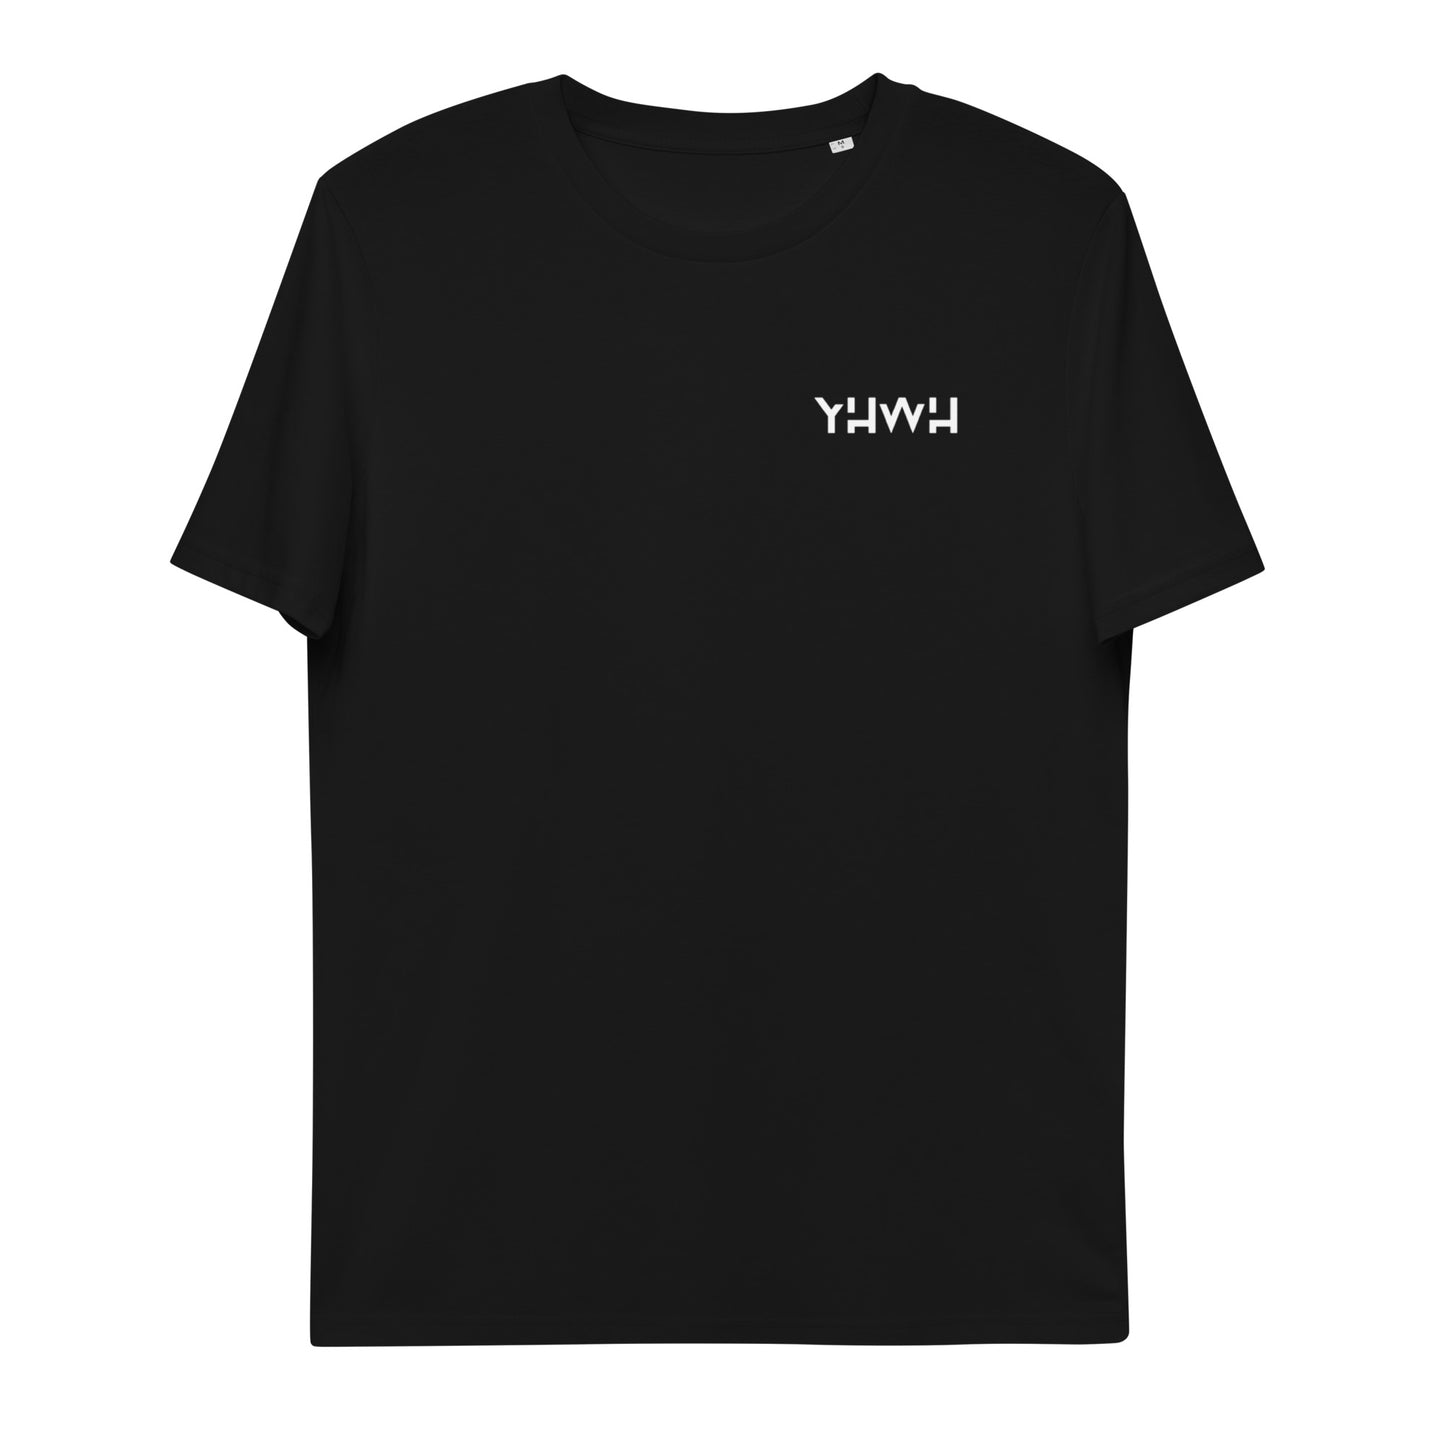 T-shirt noir 100% coton unisexe brodé YHWH